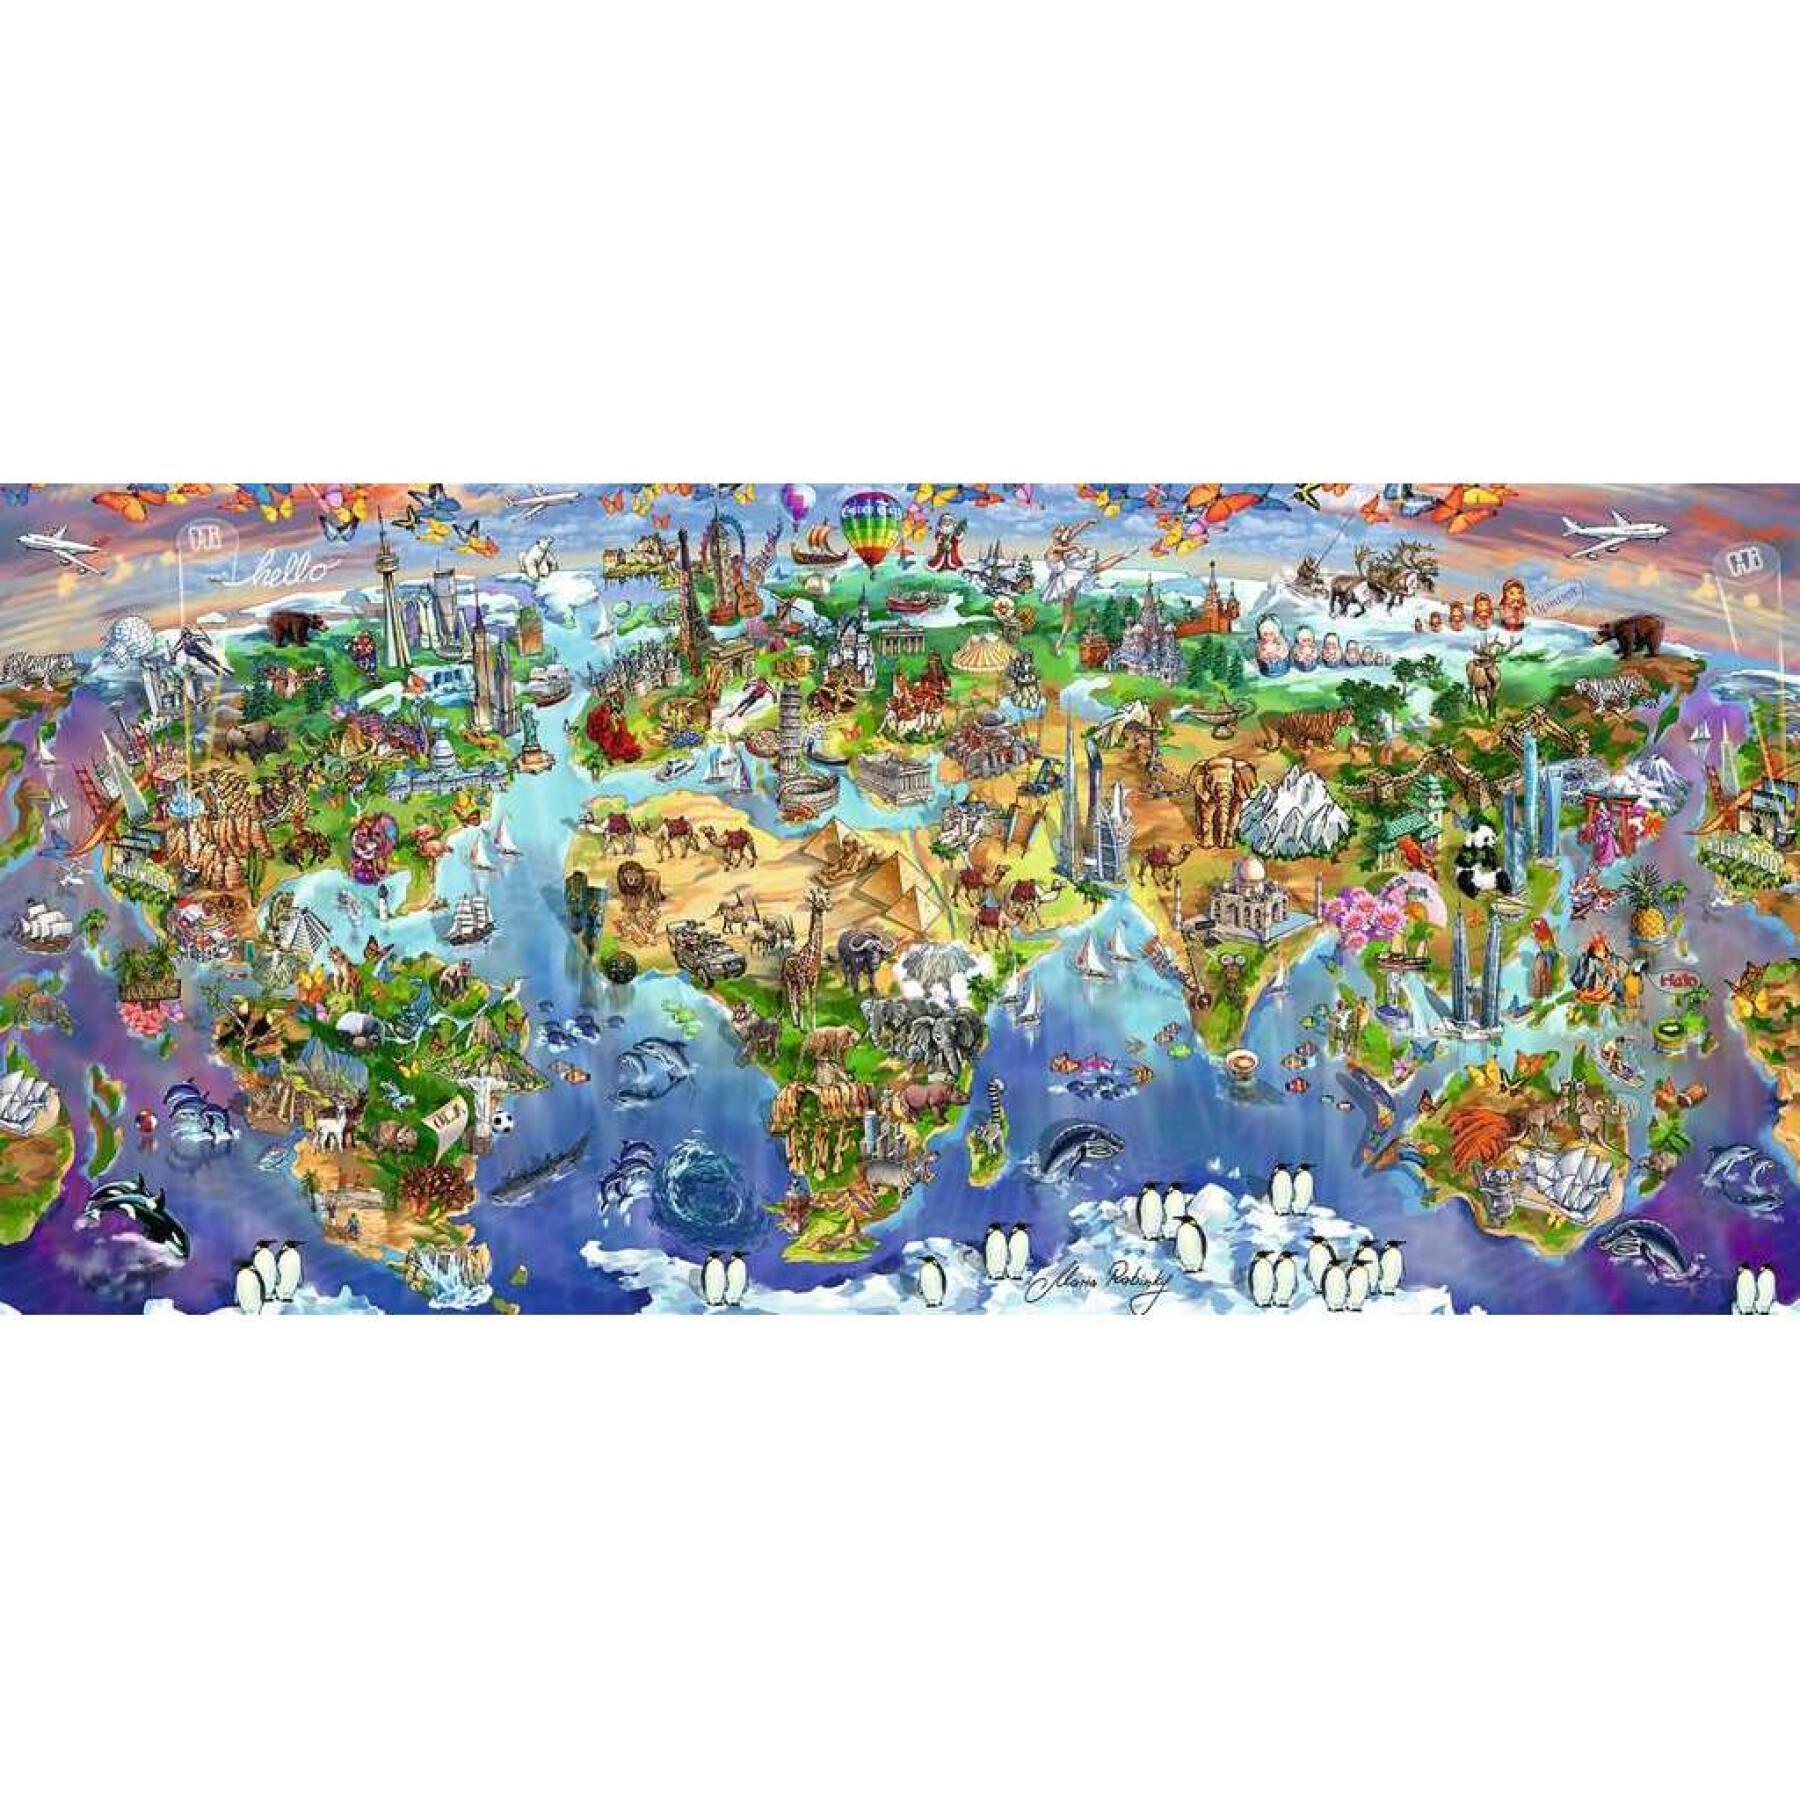 2000 peças Wonders of the World puzzle Ravensburger